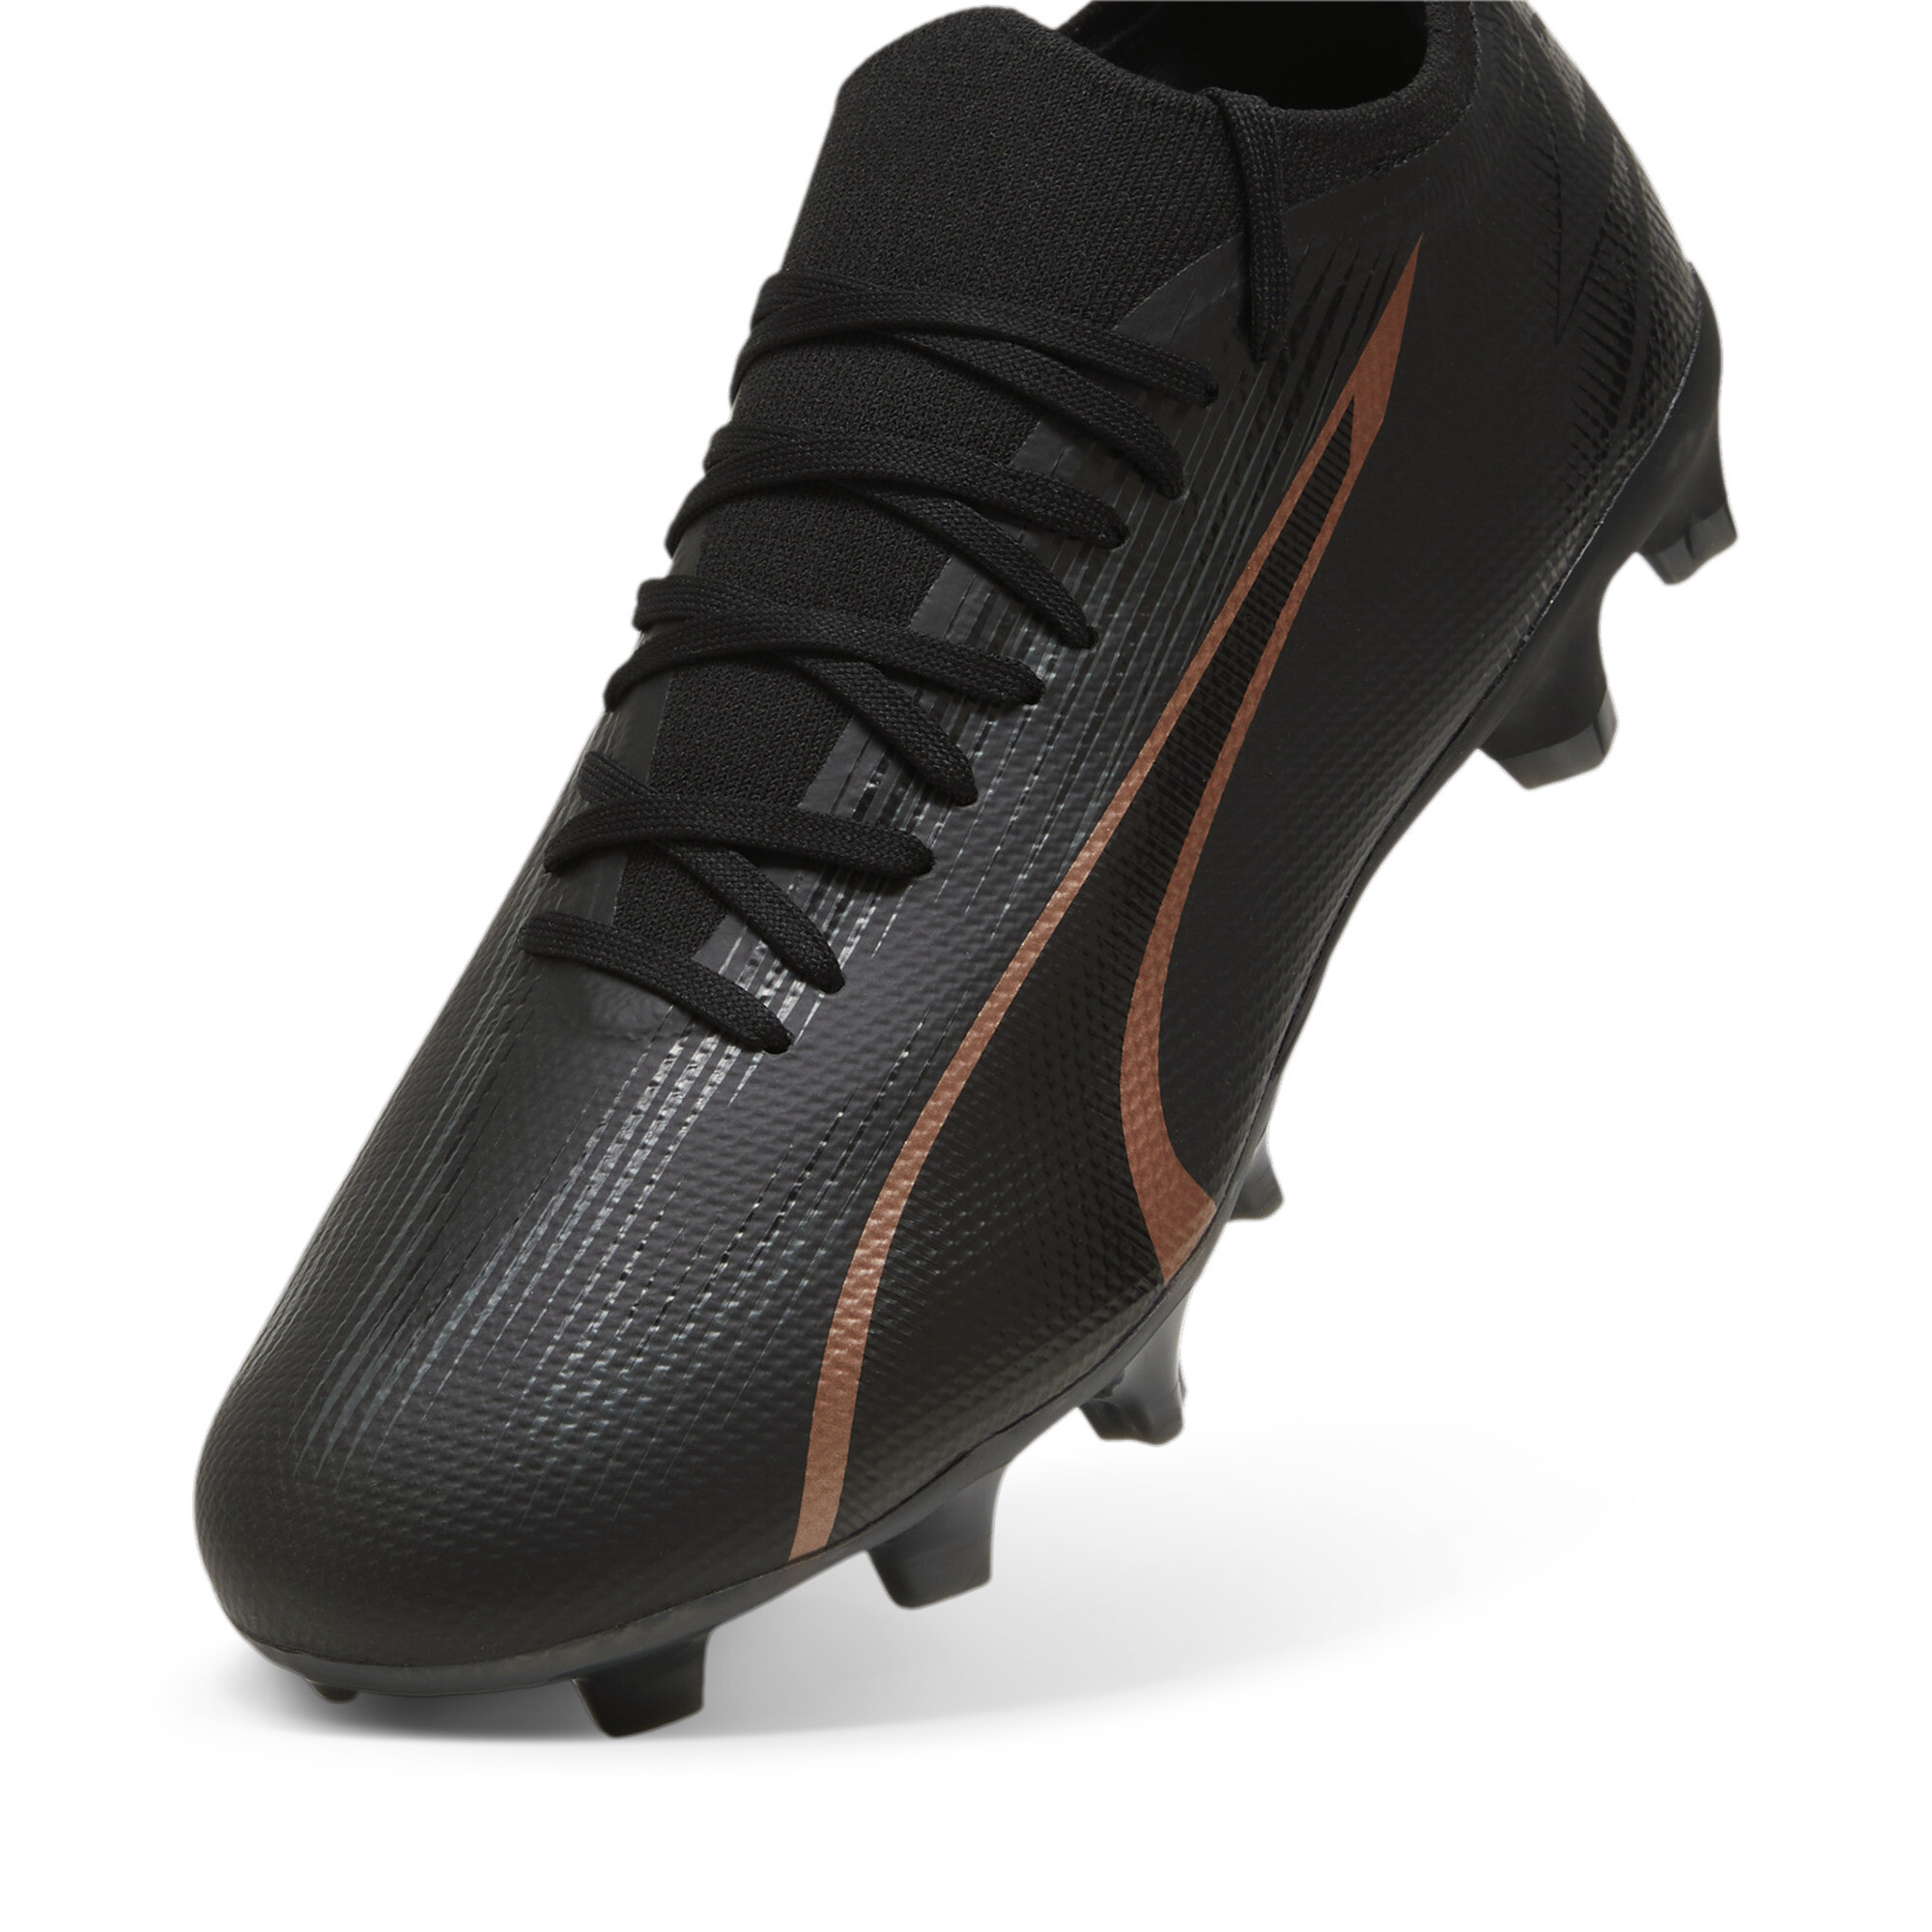 Men's PUMA ULTRA MATCH FG/AG Football Boots In Black, Size EU 40.5